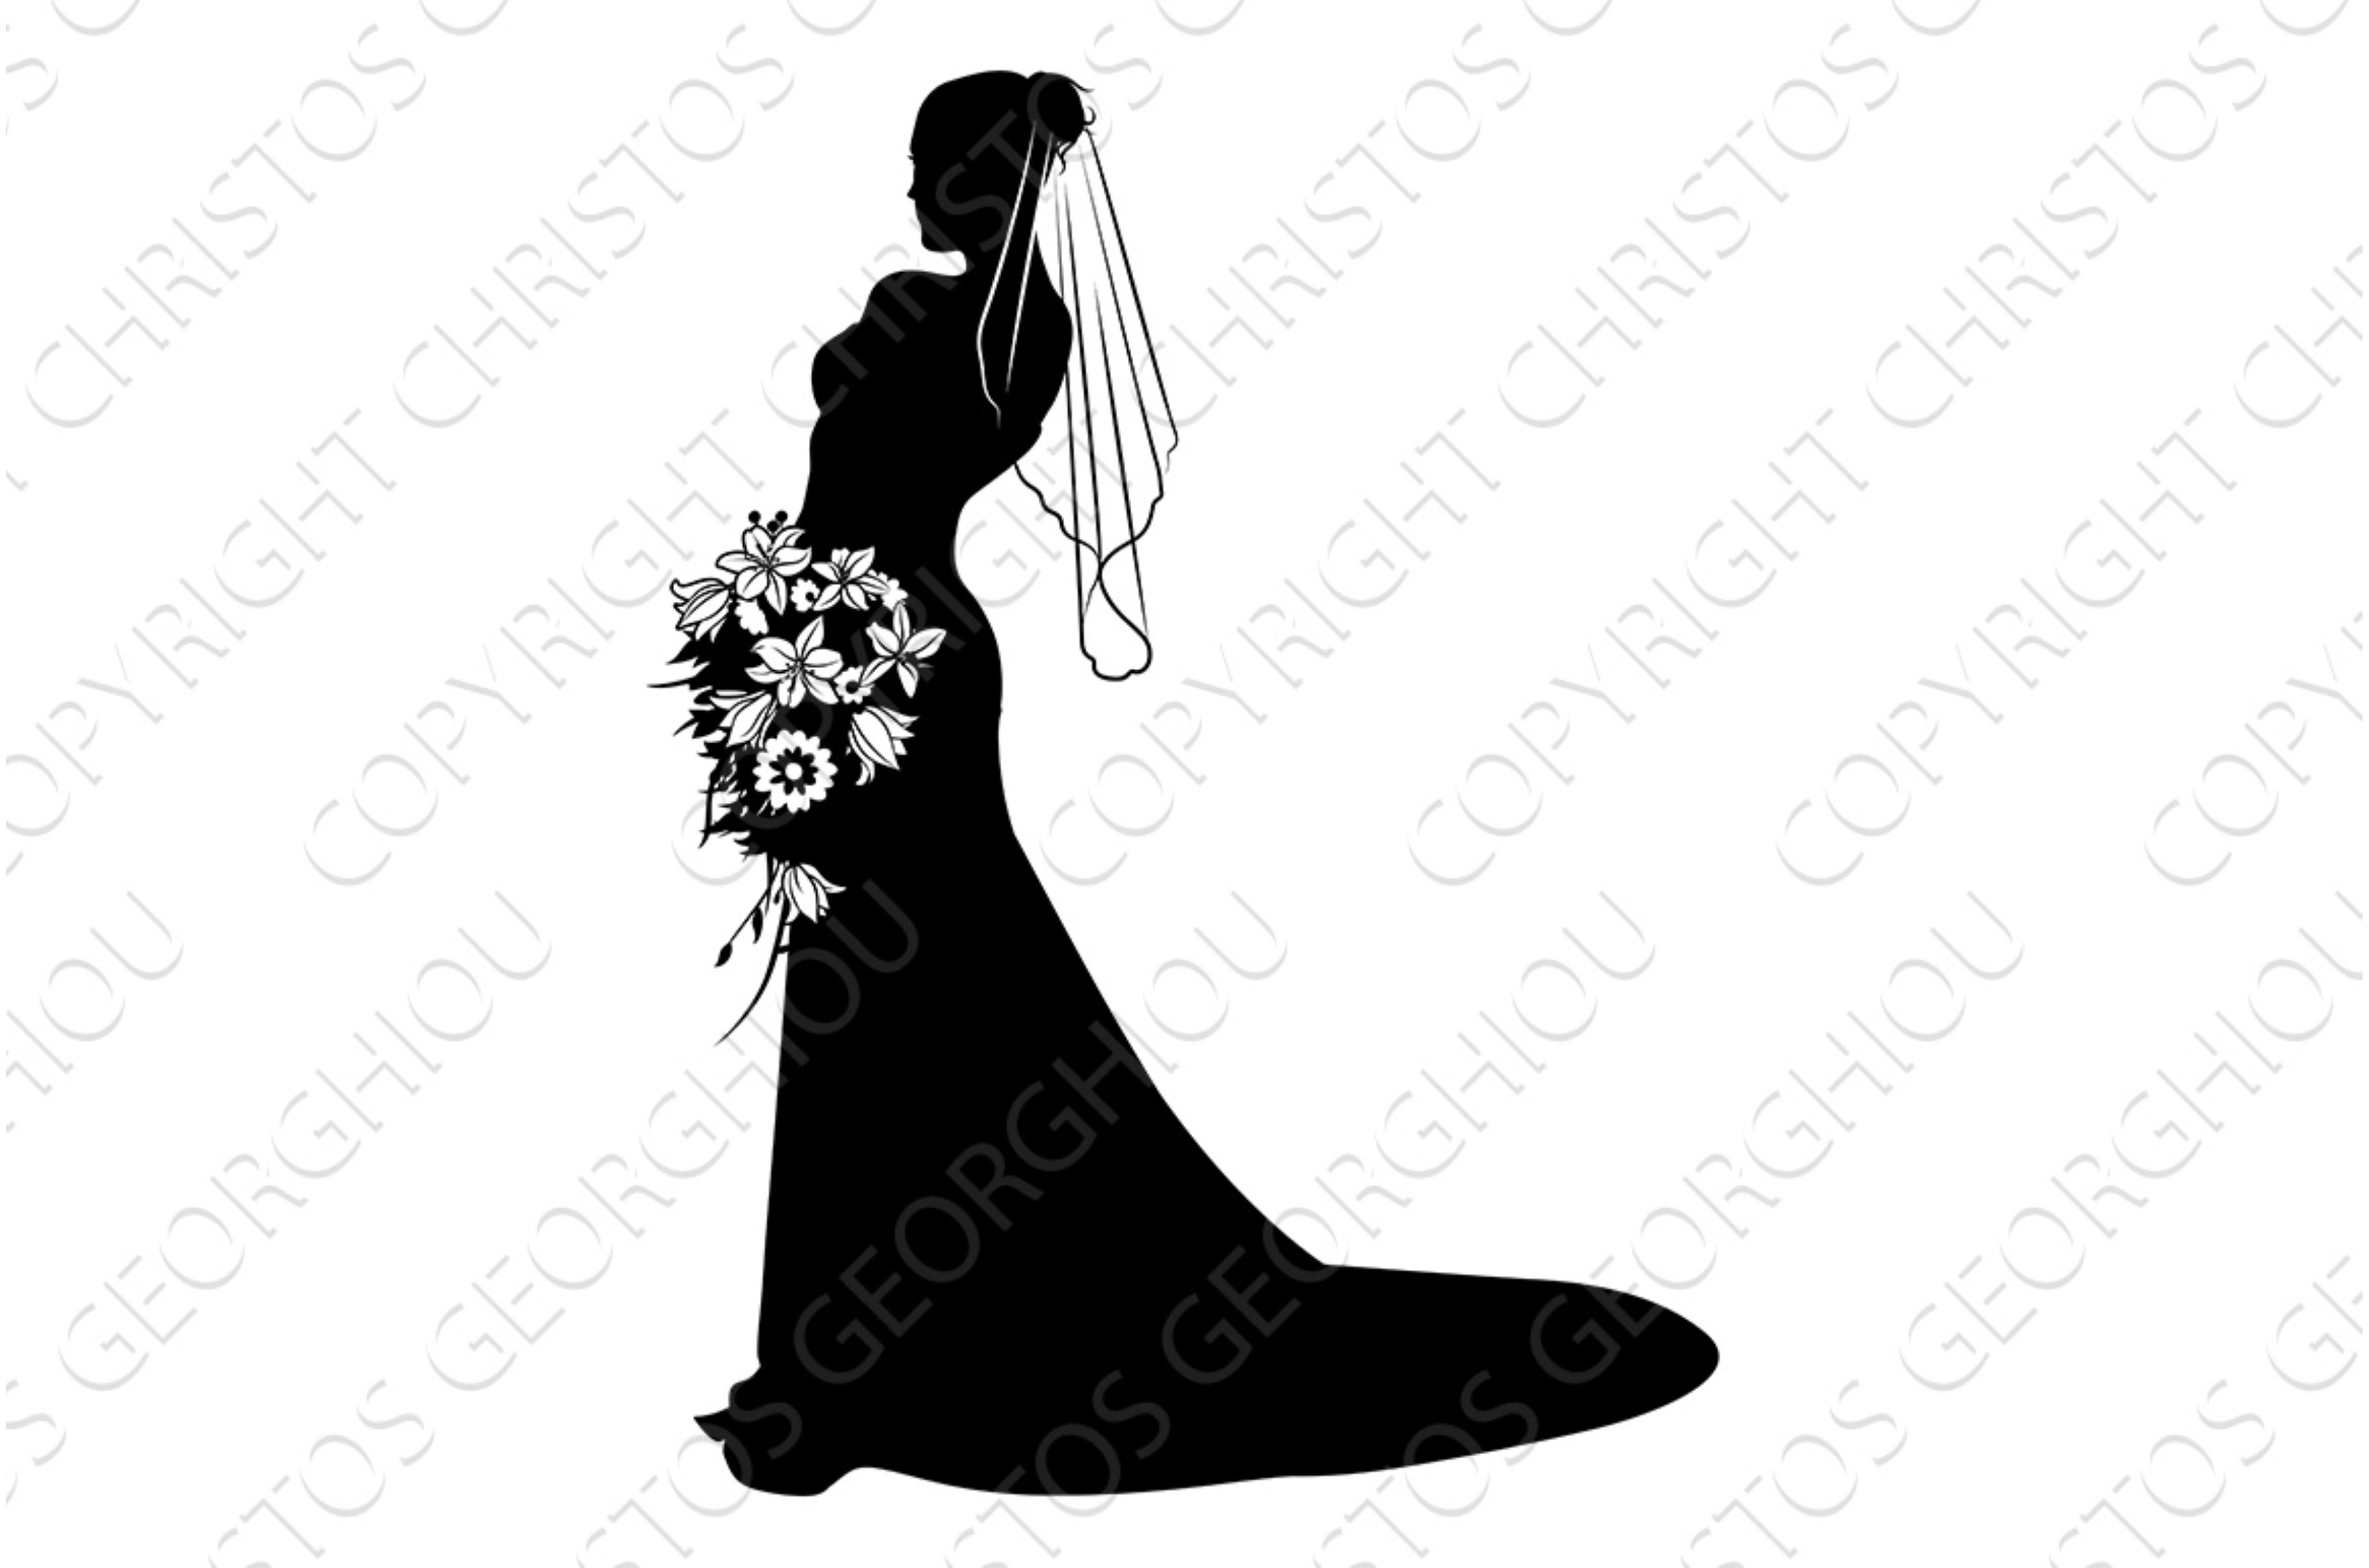 Bride Bridal Wedding Dress cover image.